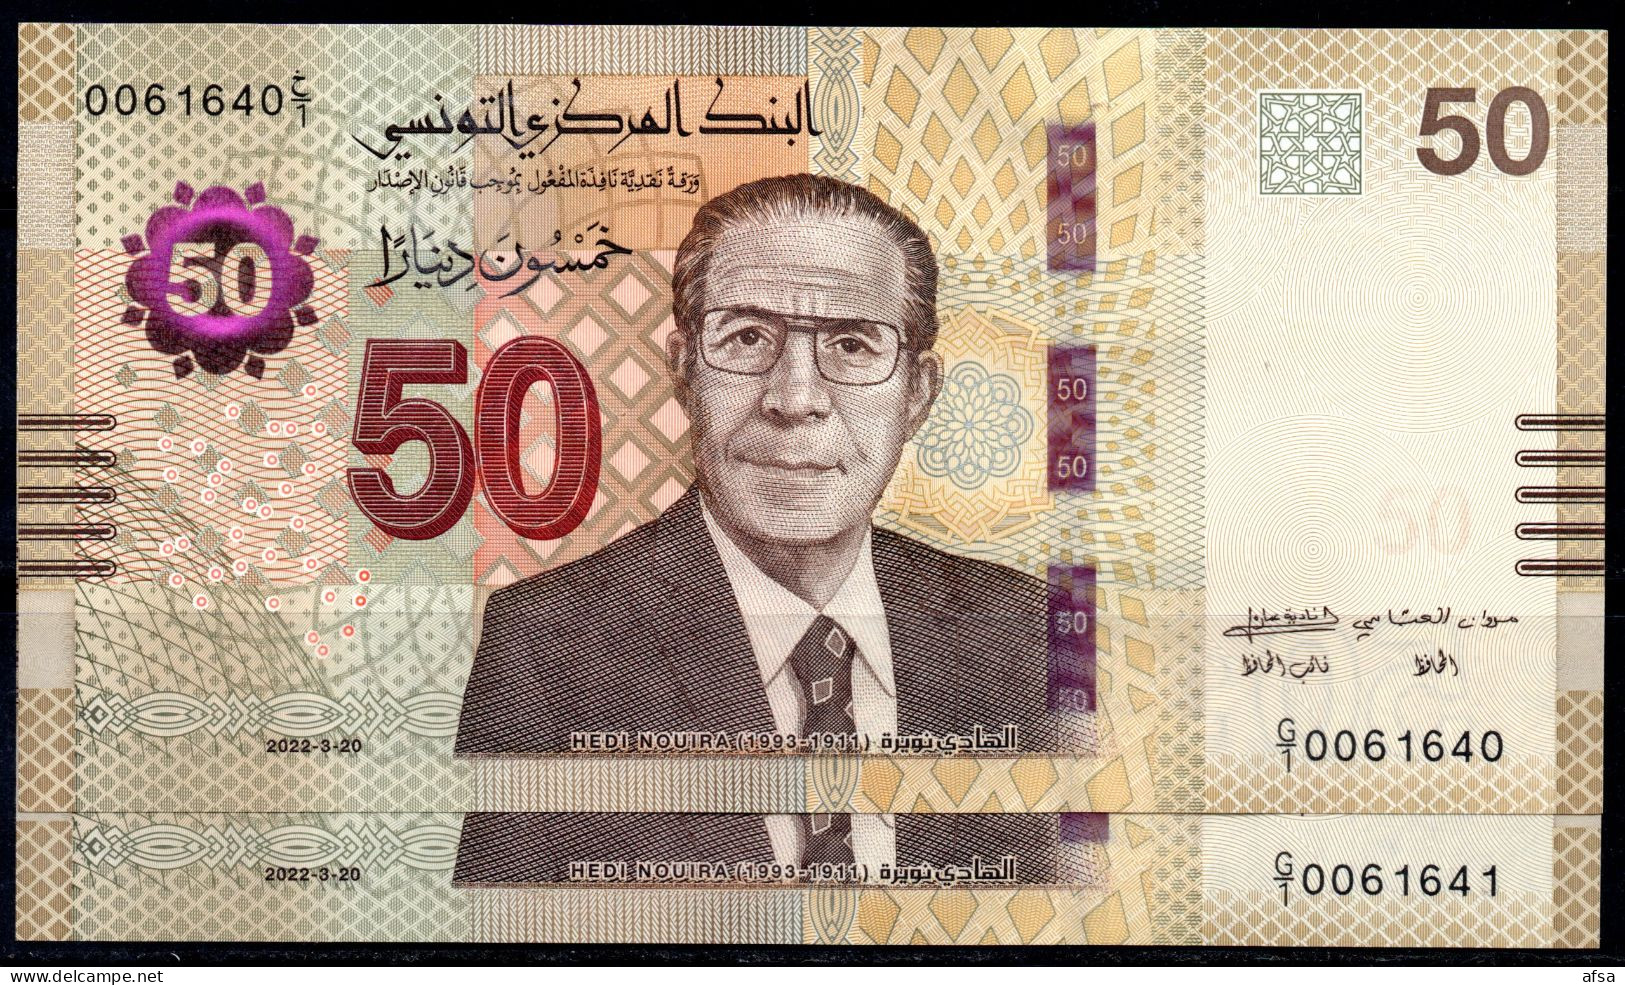 2 Banknotes Of 50 Dinars  2022 UNC** (FREE SHIPPING) //2 Billets De 50 Dinars 2022 Neufs** (ENVOI GRATUIT) - Tunisie